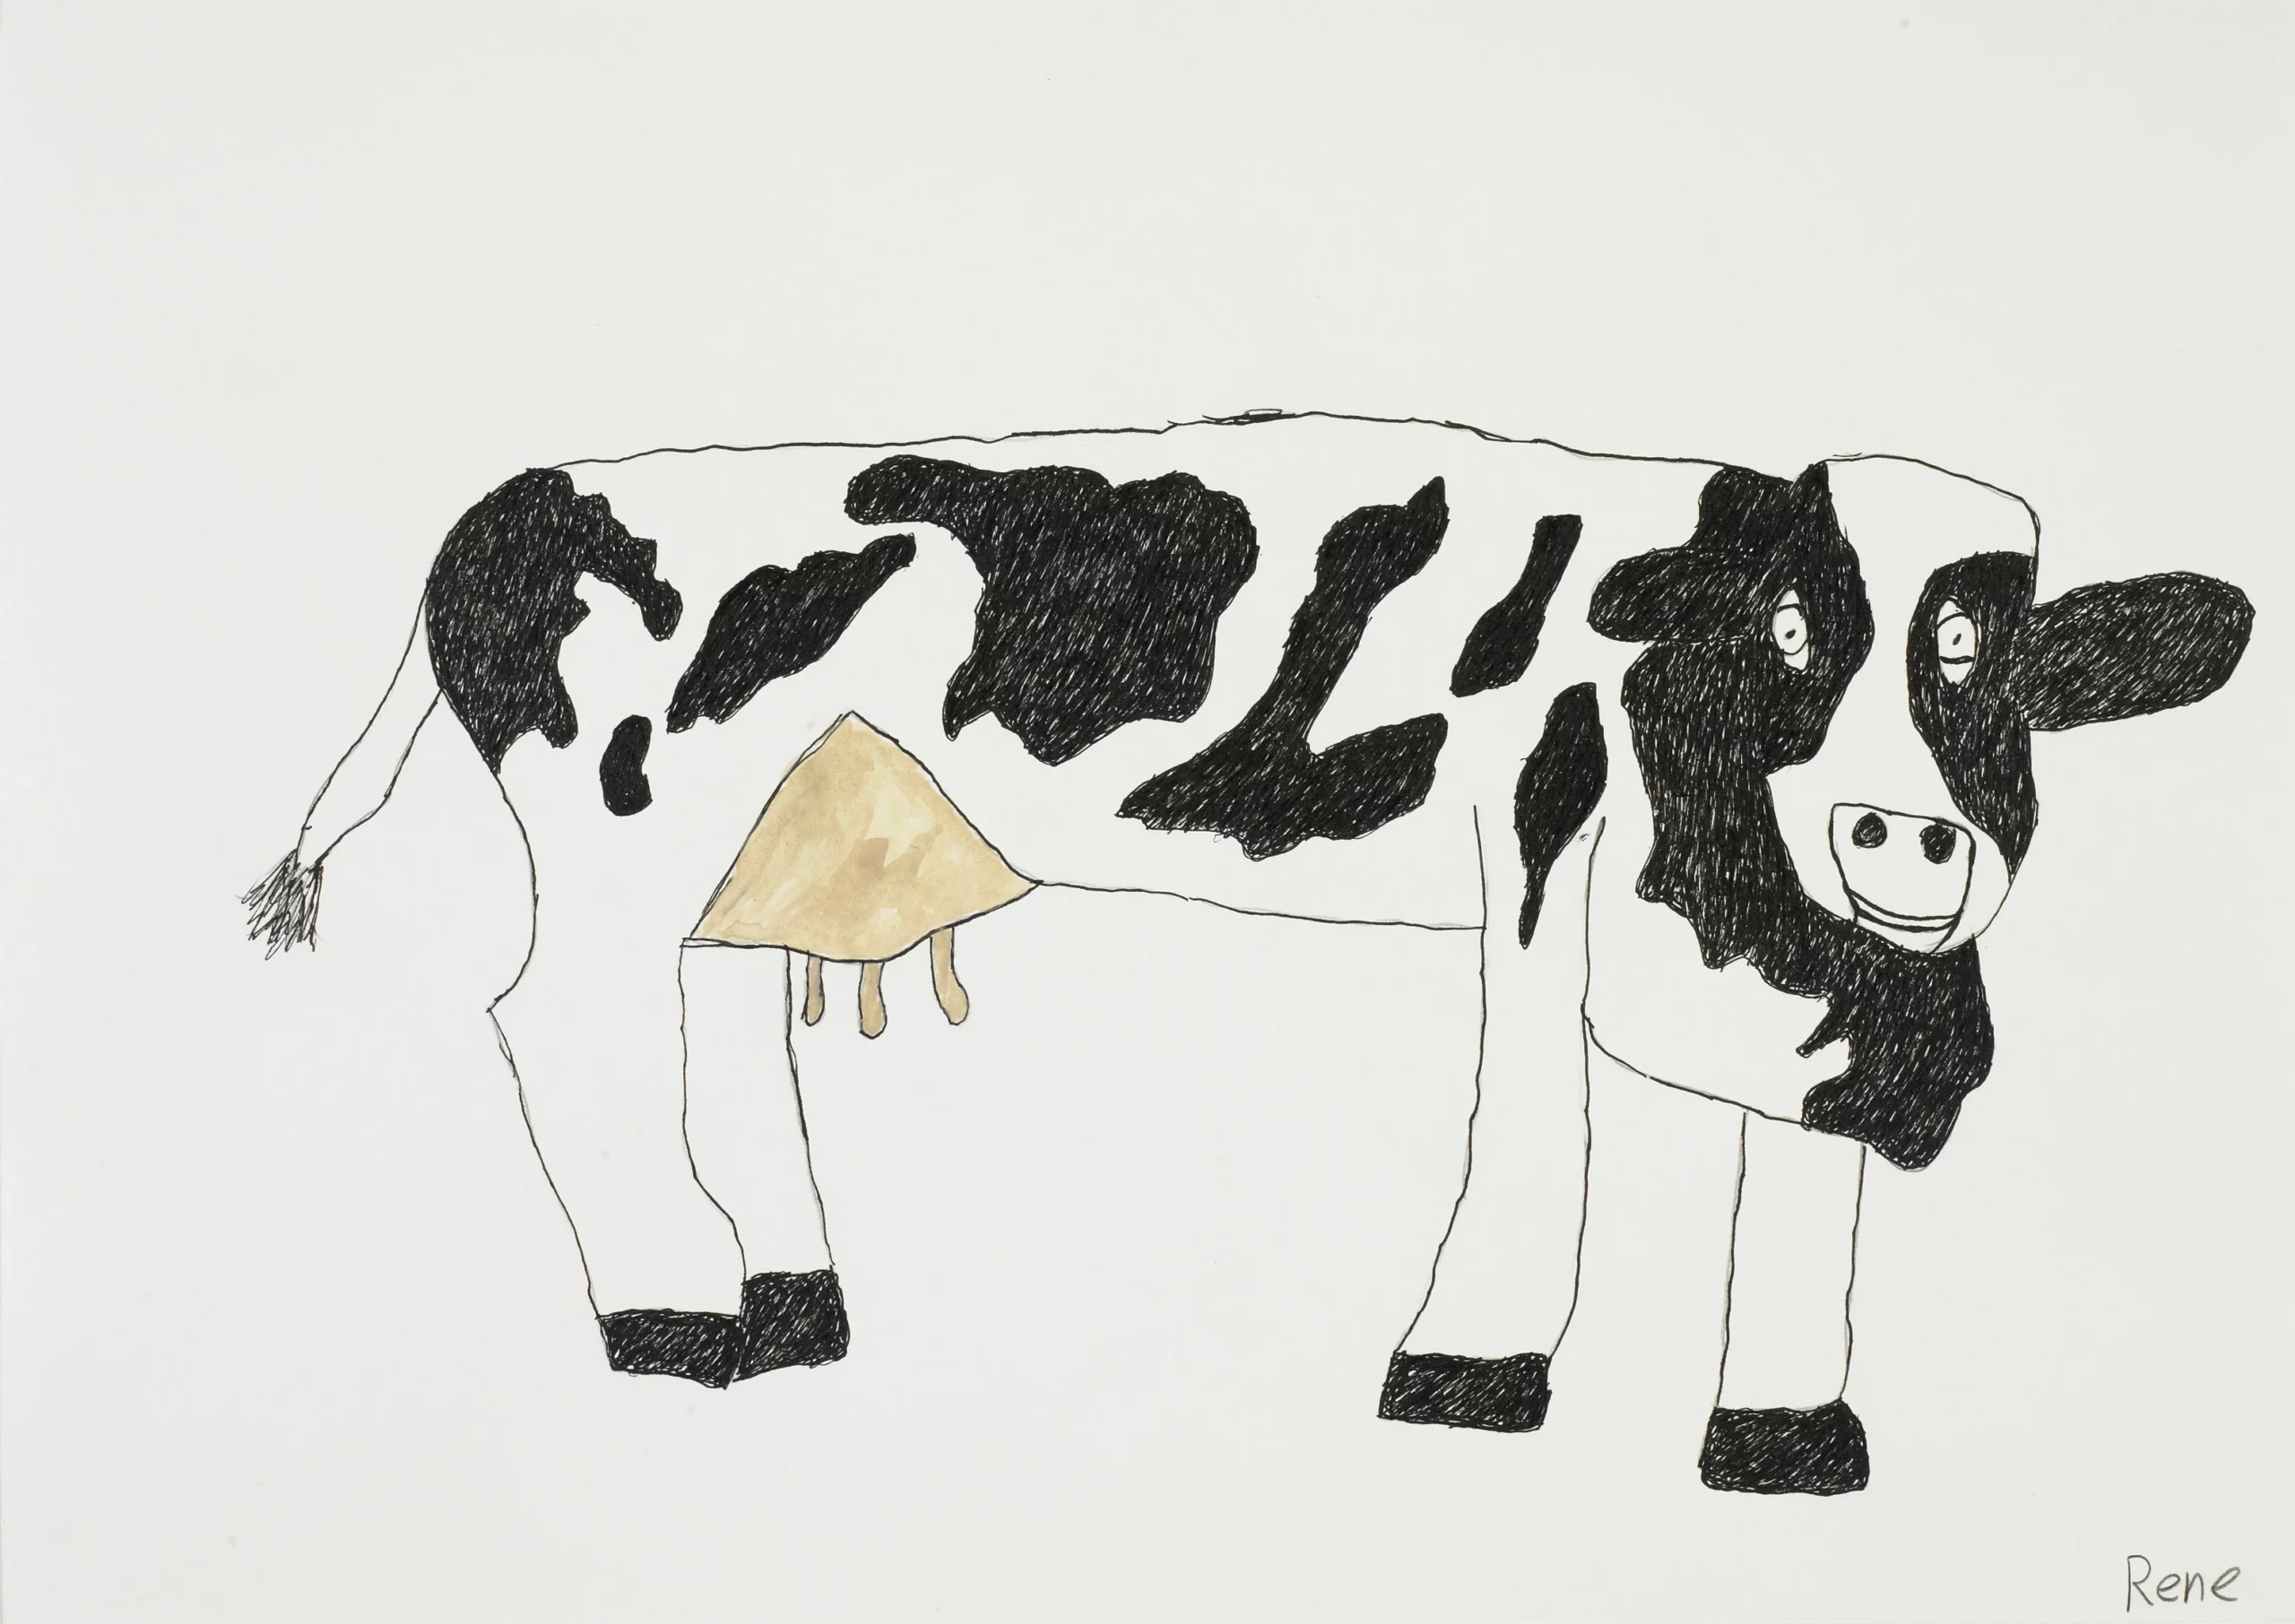 heinrich rené - Kuh / Cow